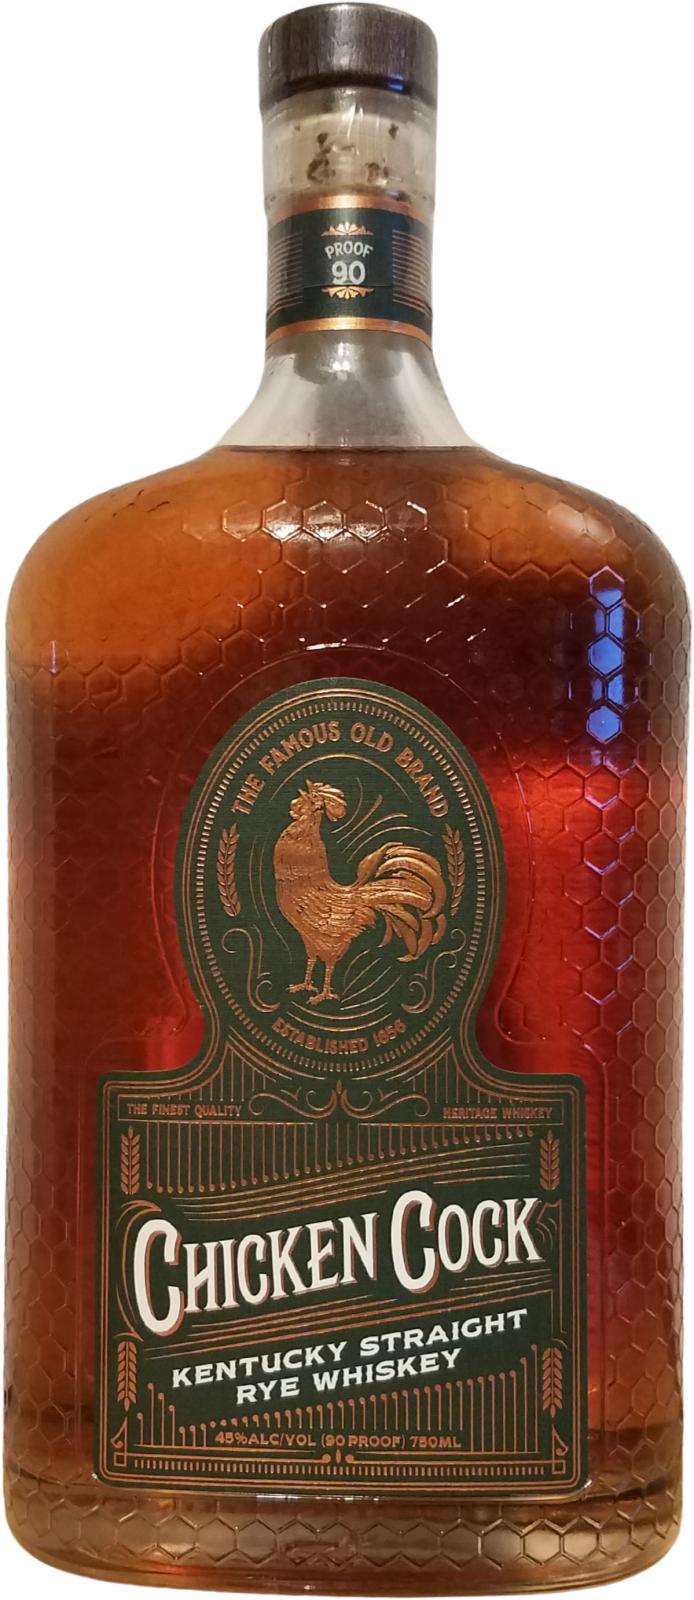 Chicken Cock Kentucky Straight Rye Whisky 45% 750ml